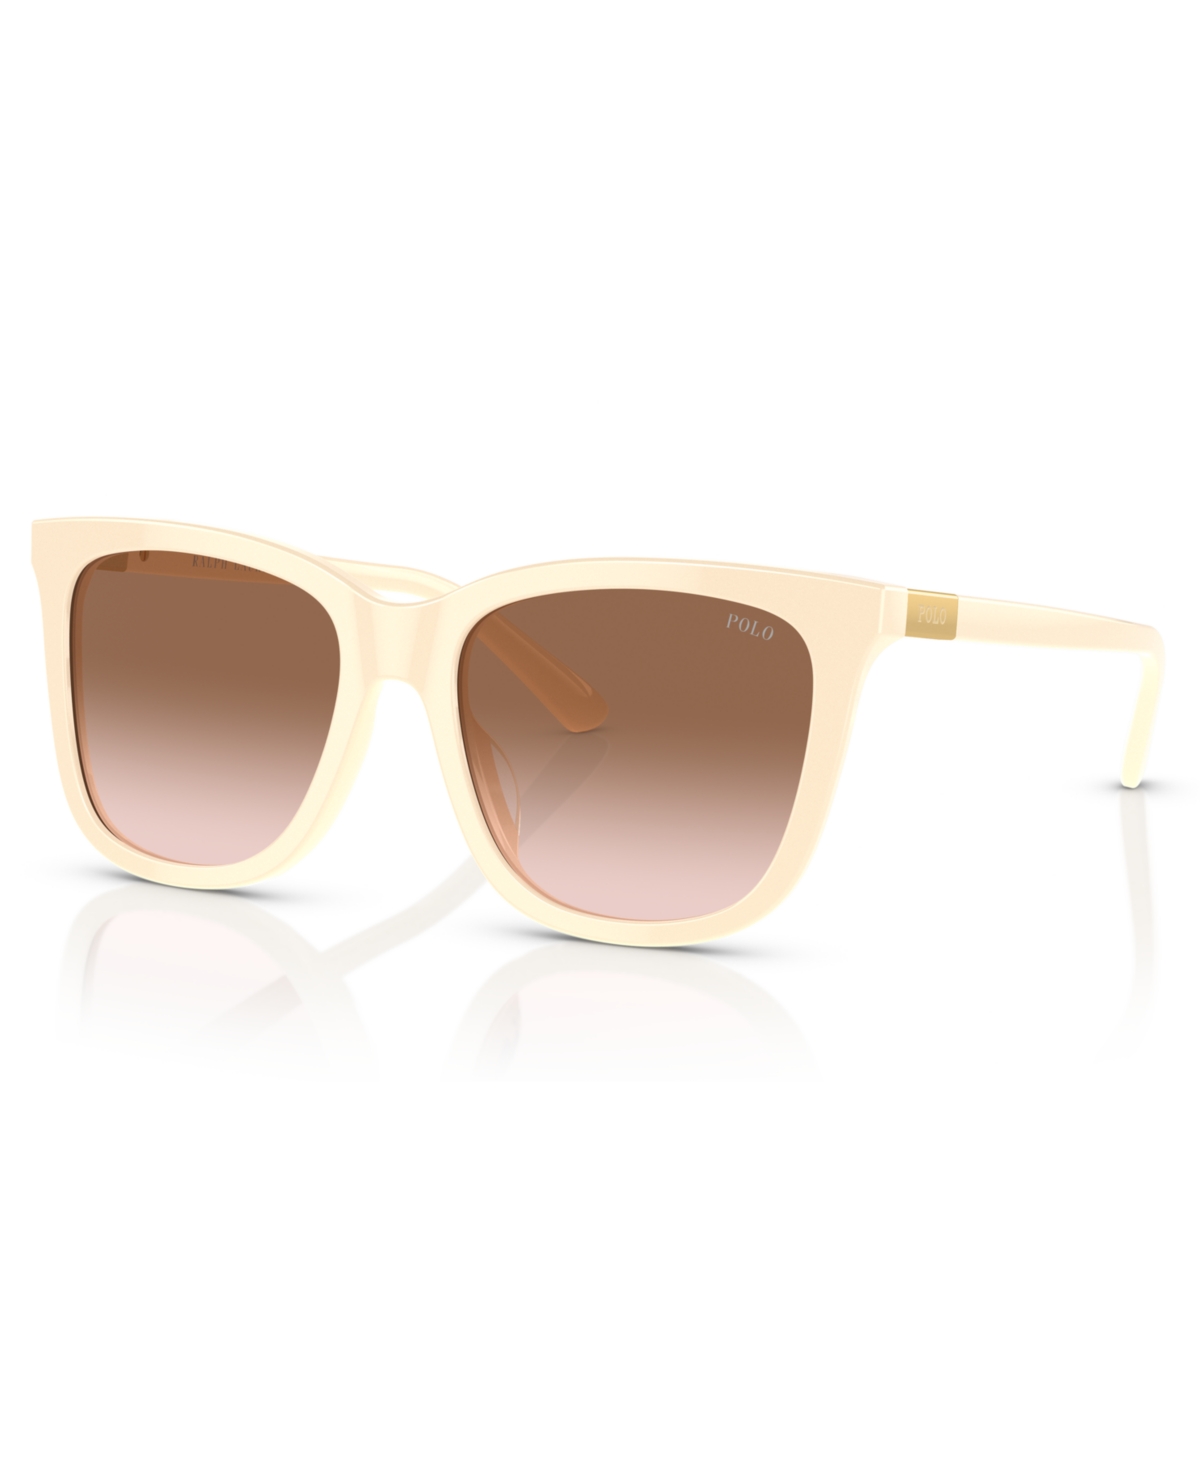 Polo Ralph Lauren Women's Sunglasses, Ph4201u In Shiny Cream